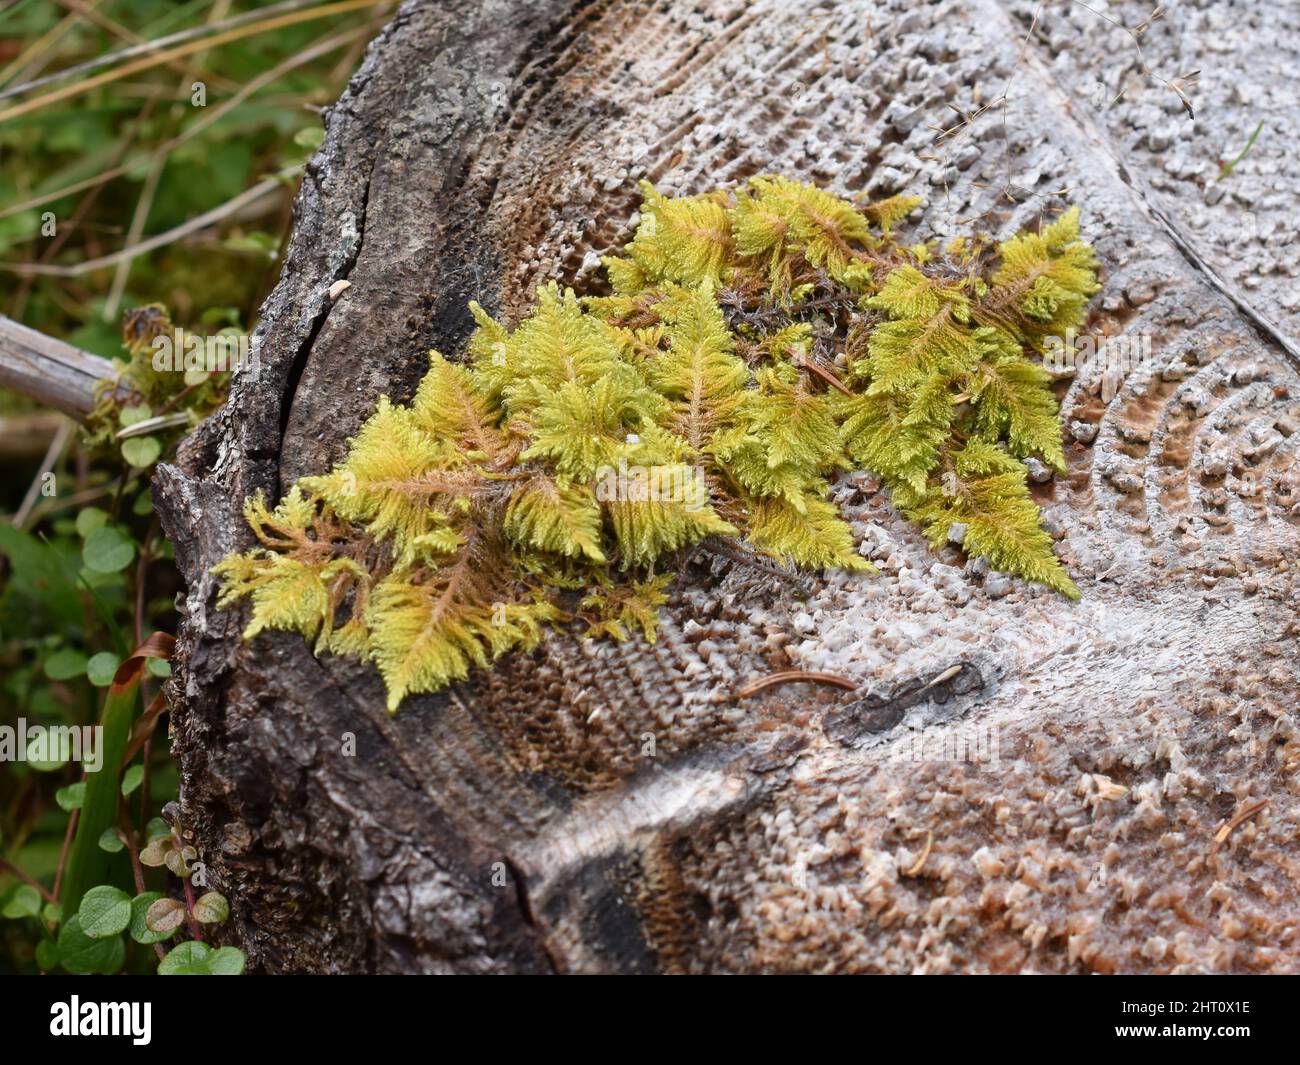 Knights plume moss Ptilium crista-castrensis growing on a tree stump Stock Photo